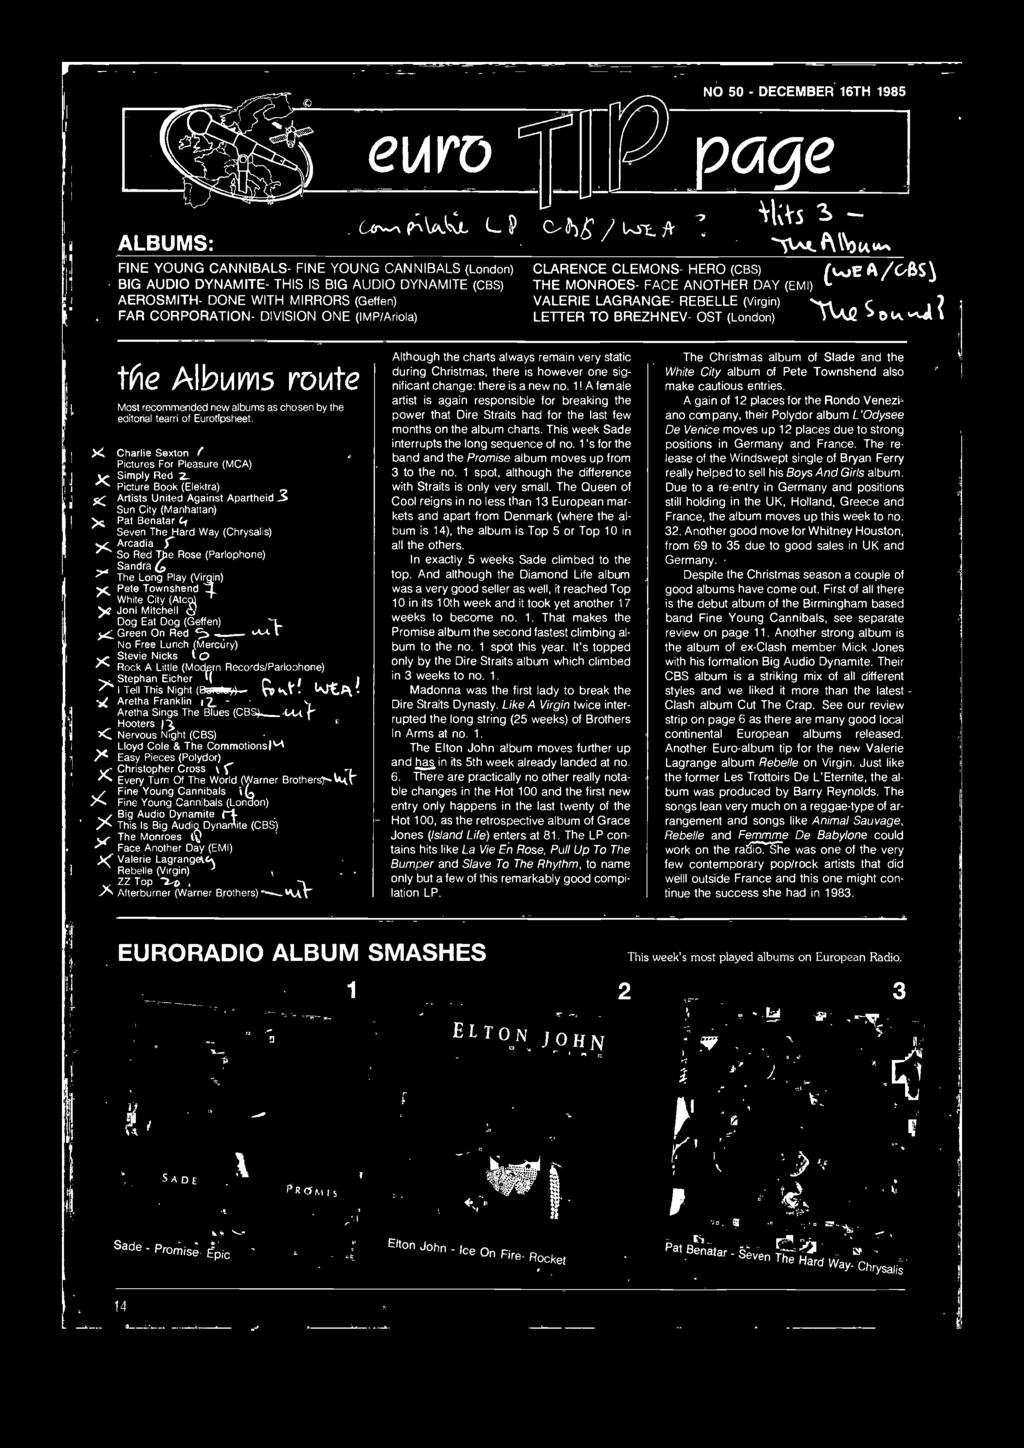 K Artists United Against Apartheid 3 Sun City (Manhattan) Pat Benatar Seven The Hard Way (Chrysalis) Arcadia f So Red The Rose (Parlophone) Sandra 6 "- The Long Play (Vir in) Pete Townshend White